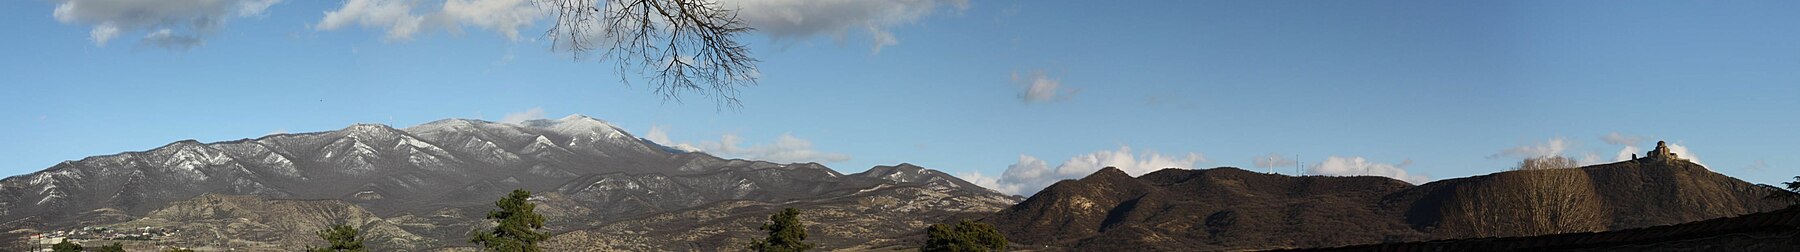 Mtskheta mountains.jpg